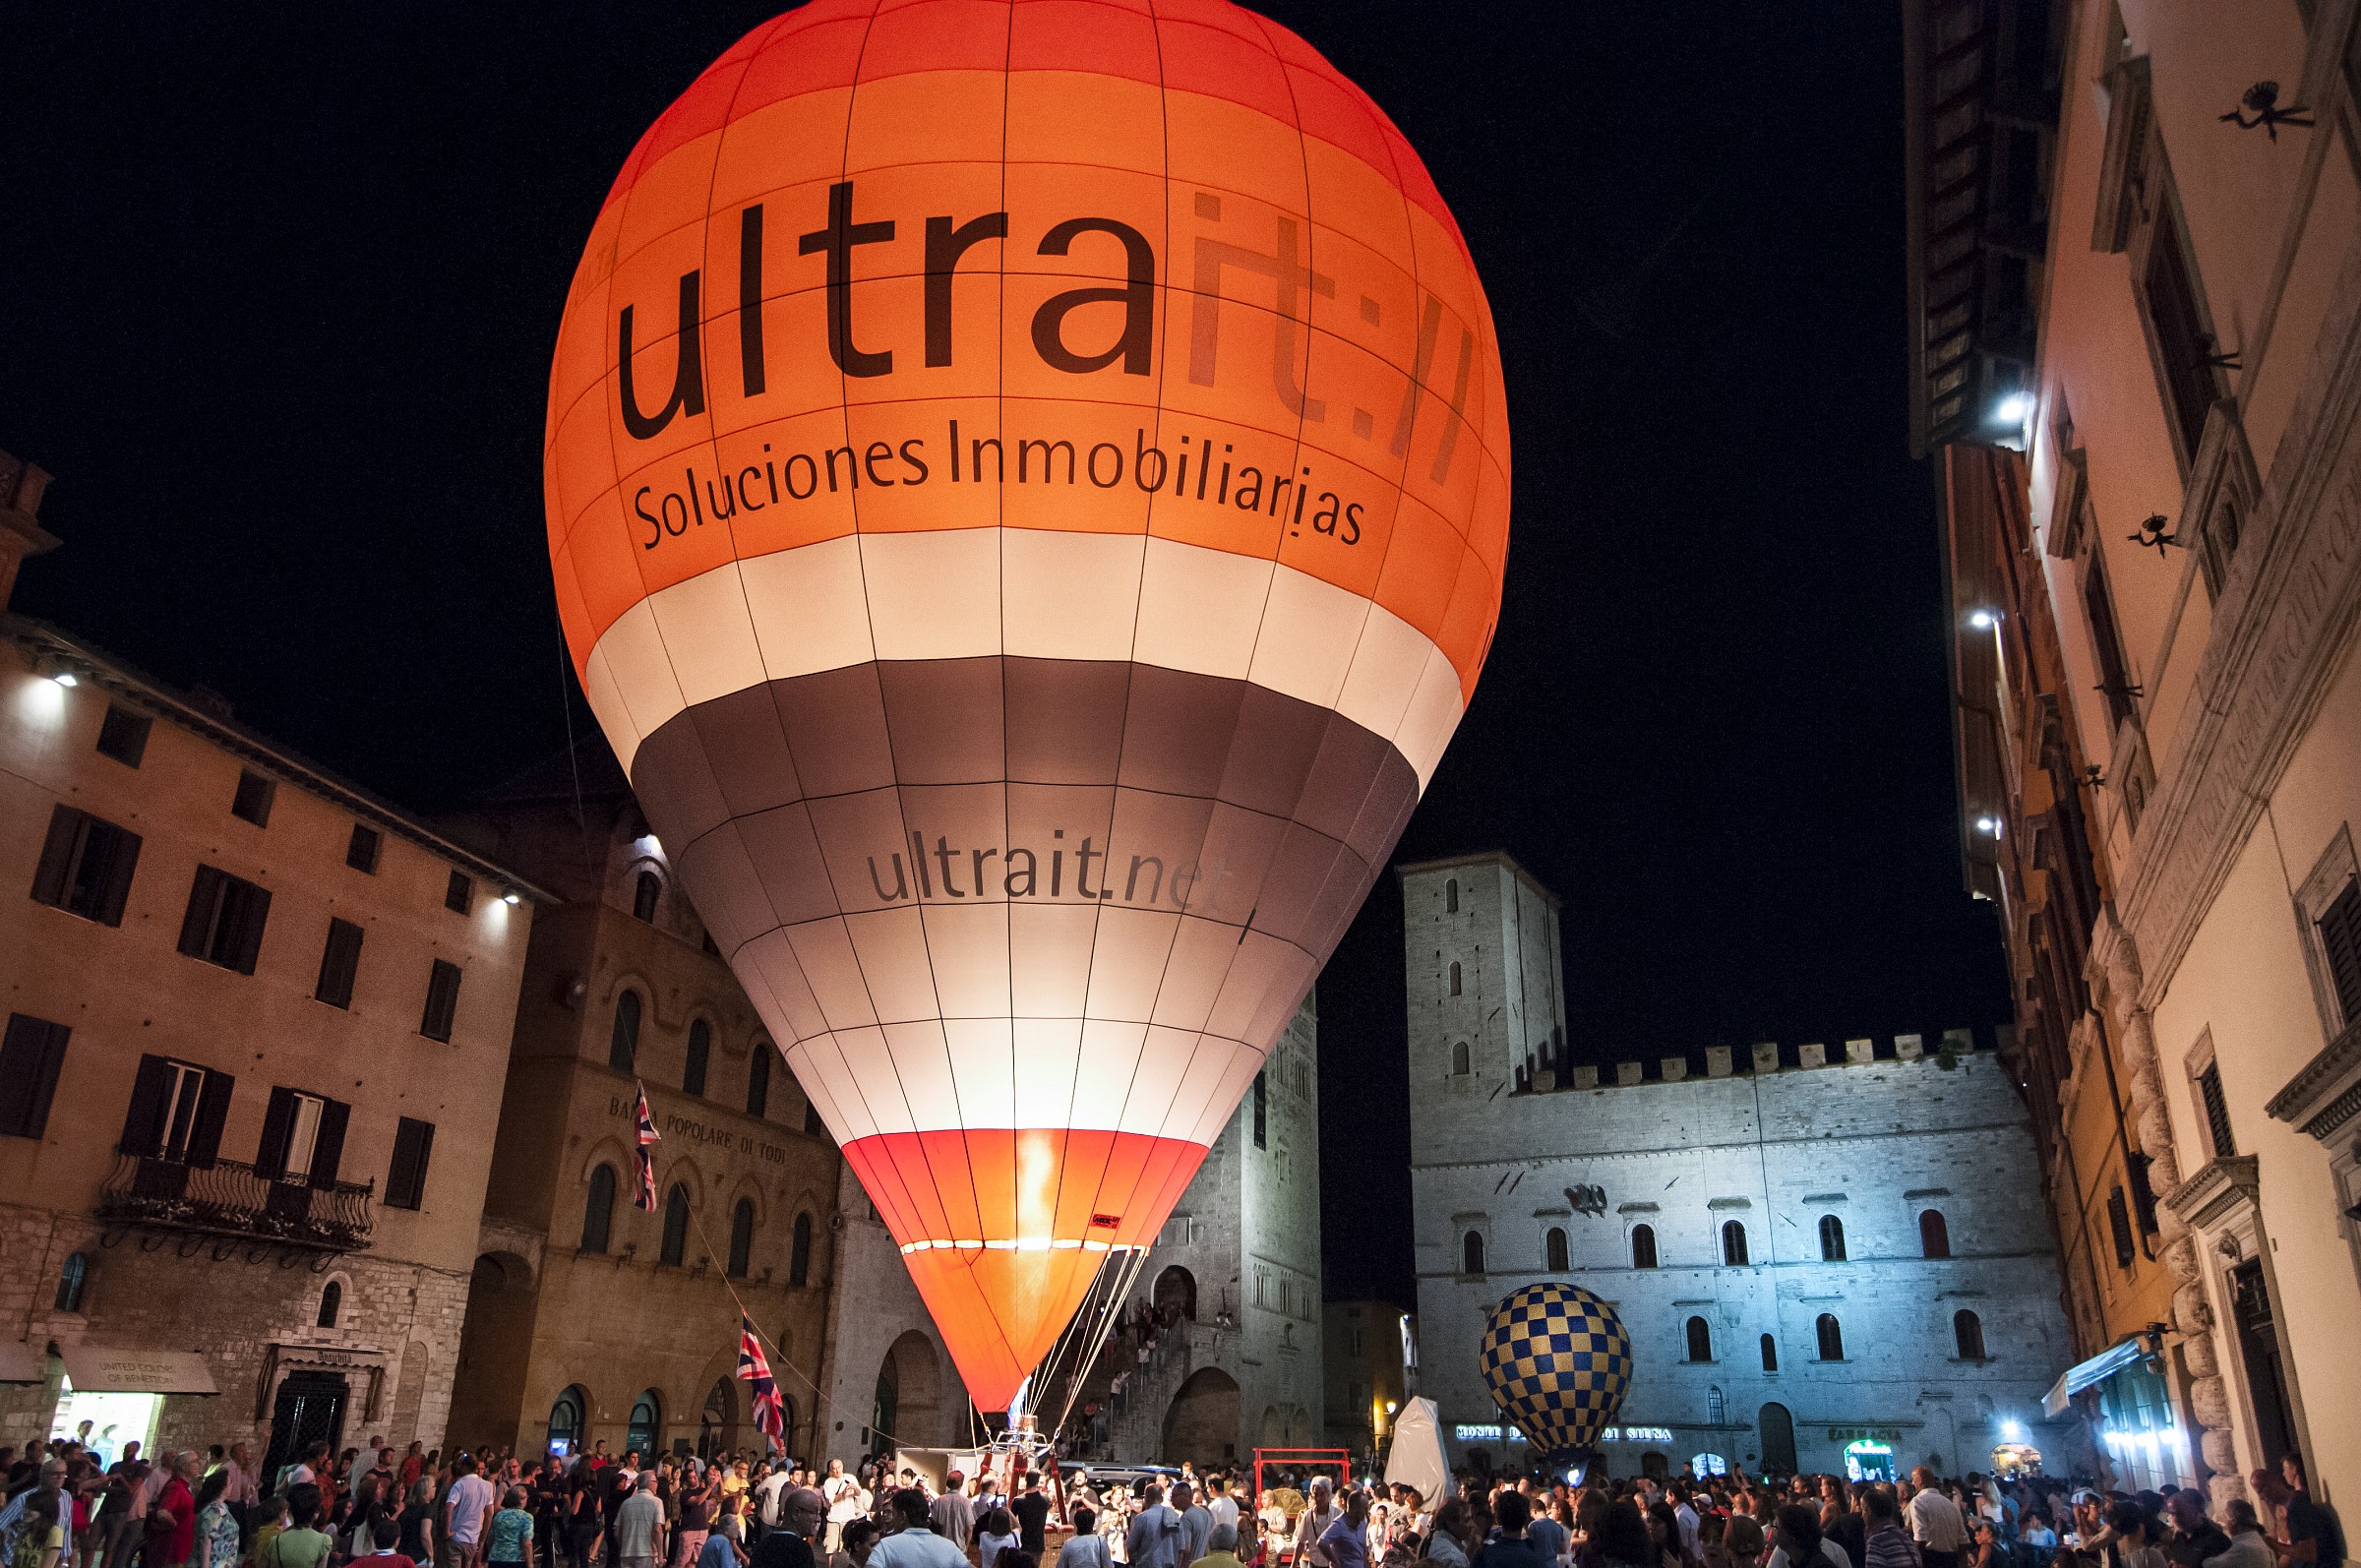 Festival of Balloons in Todi...